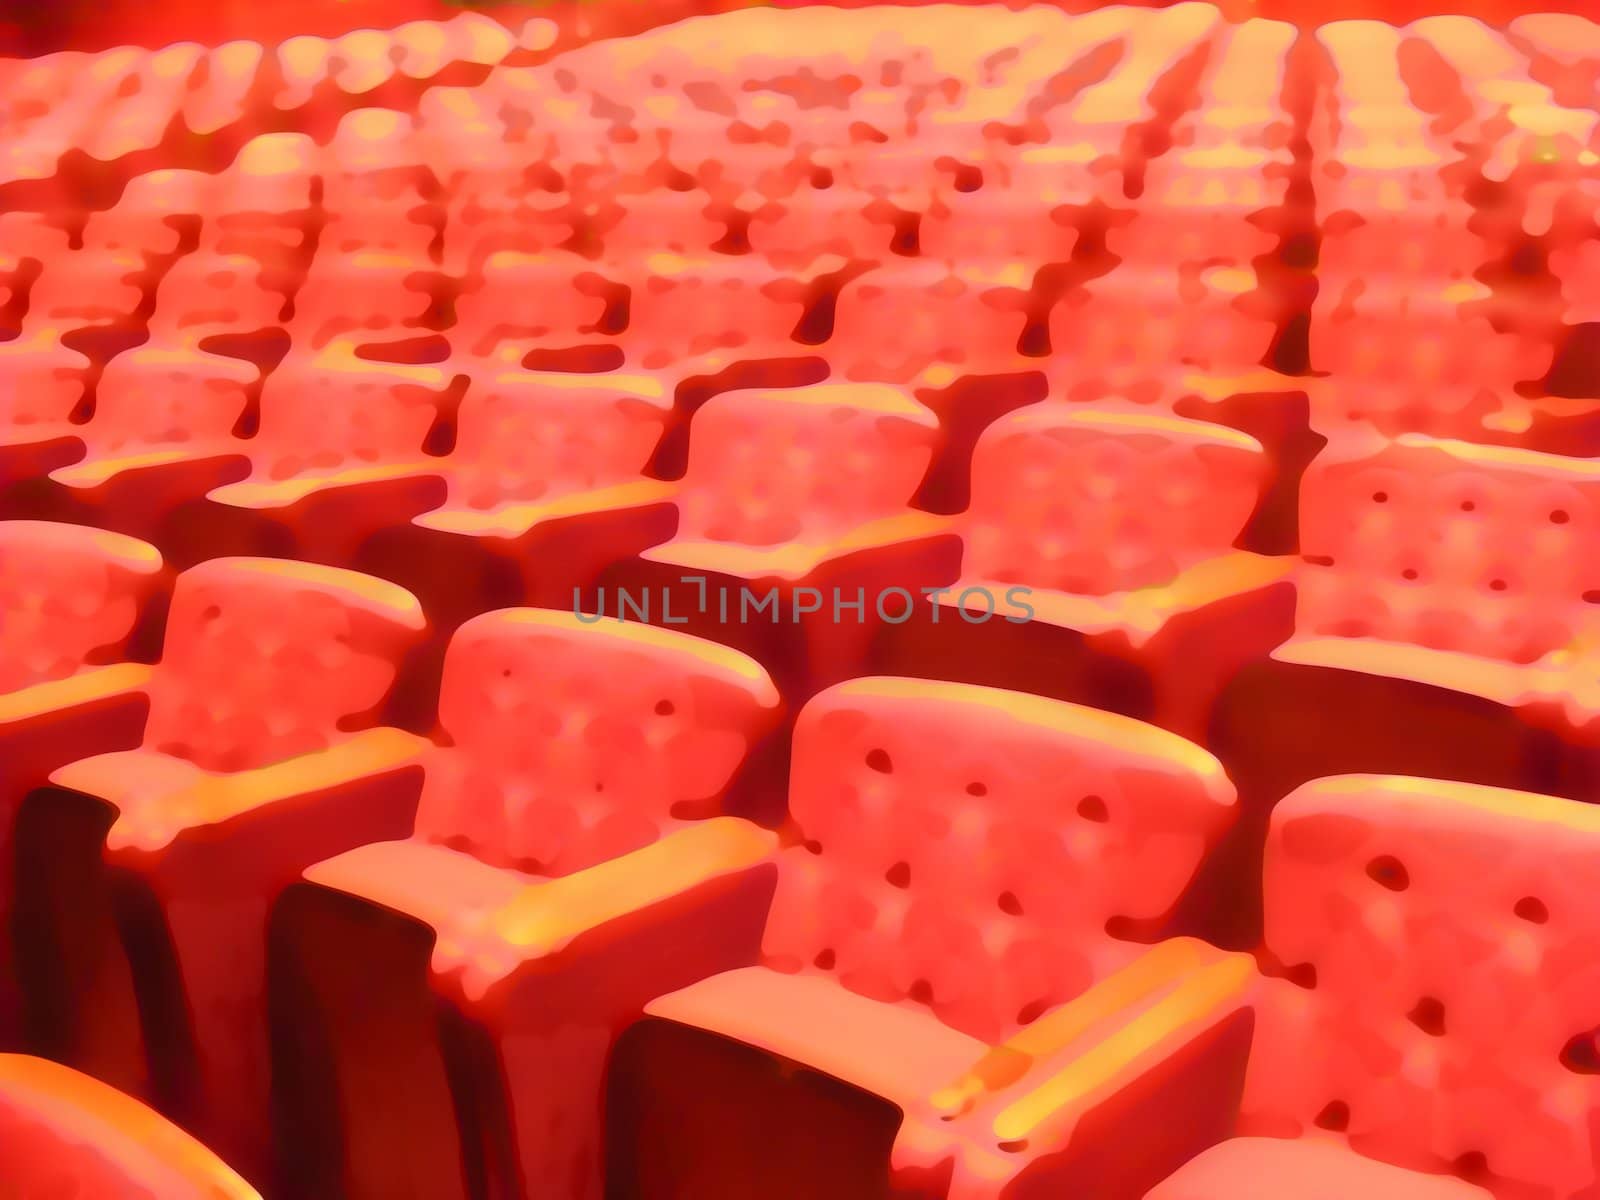 Cinema seating by darrenwhittingham